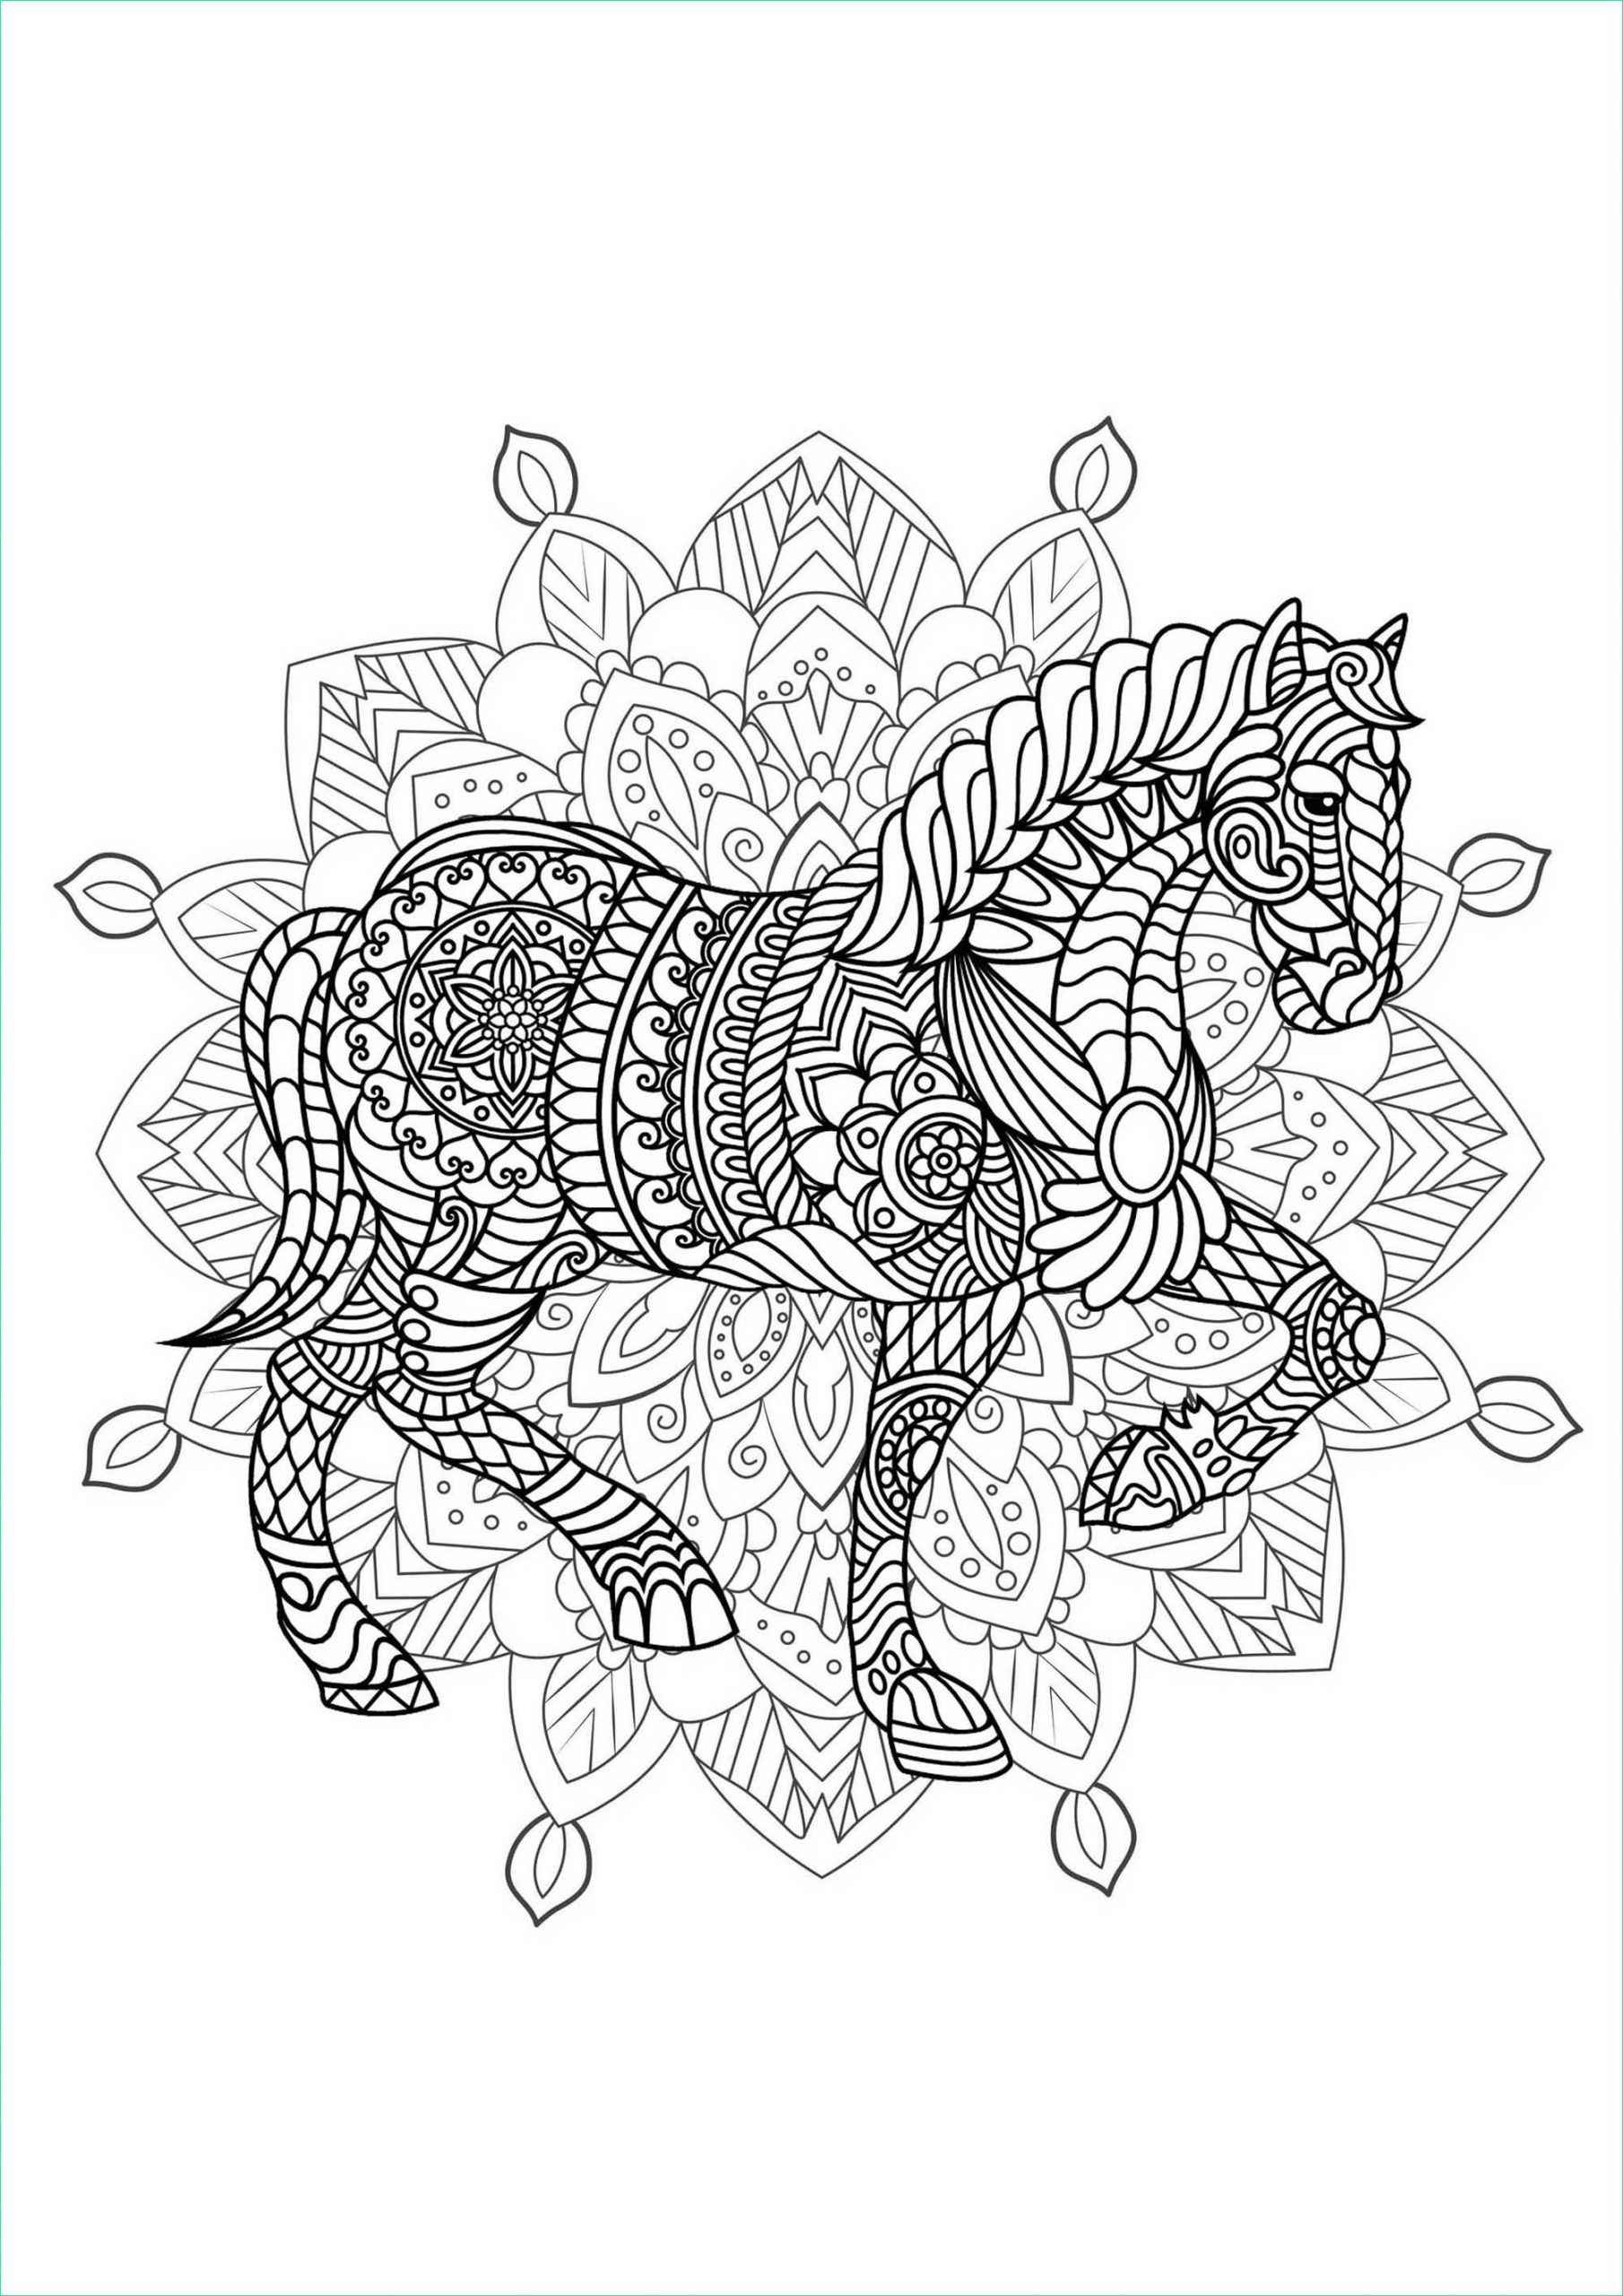 Coloriage De Mandala A Imprimer Inspirant Photos Plex Mandala Coloring Page with Horse 2 Difficult